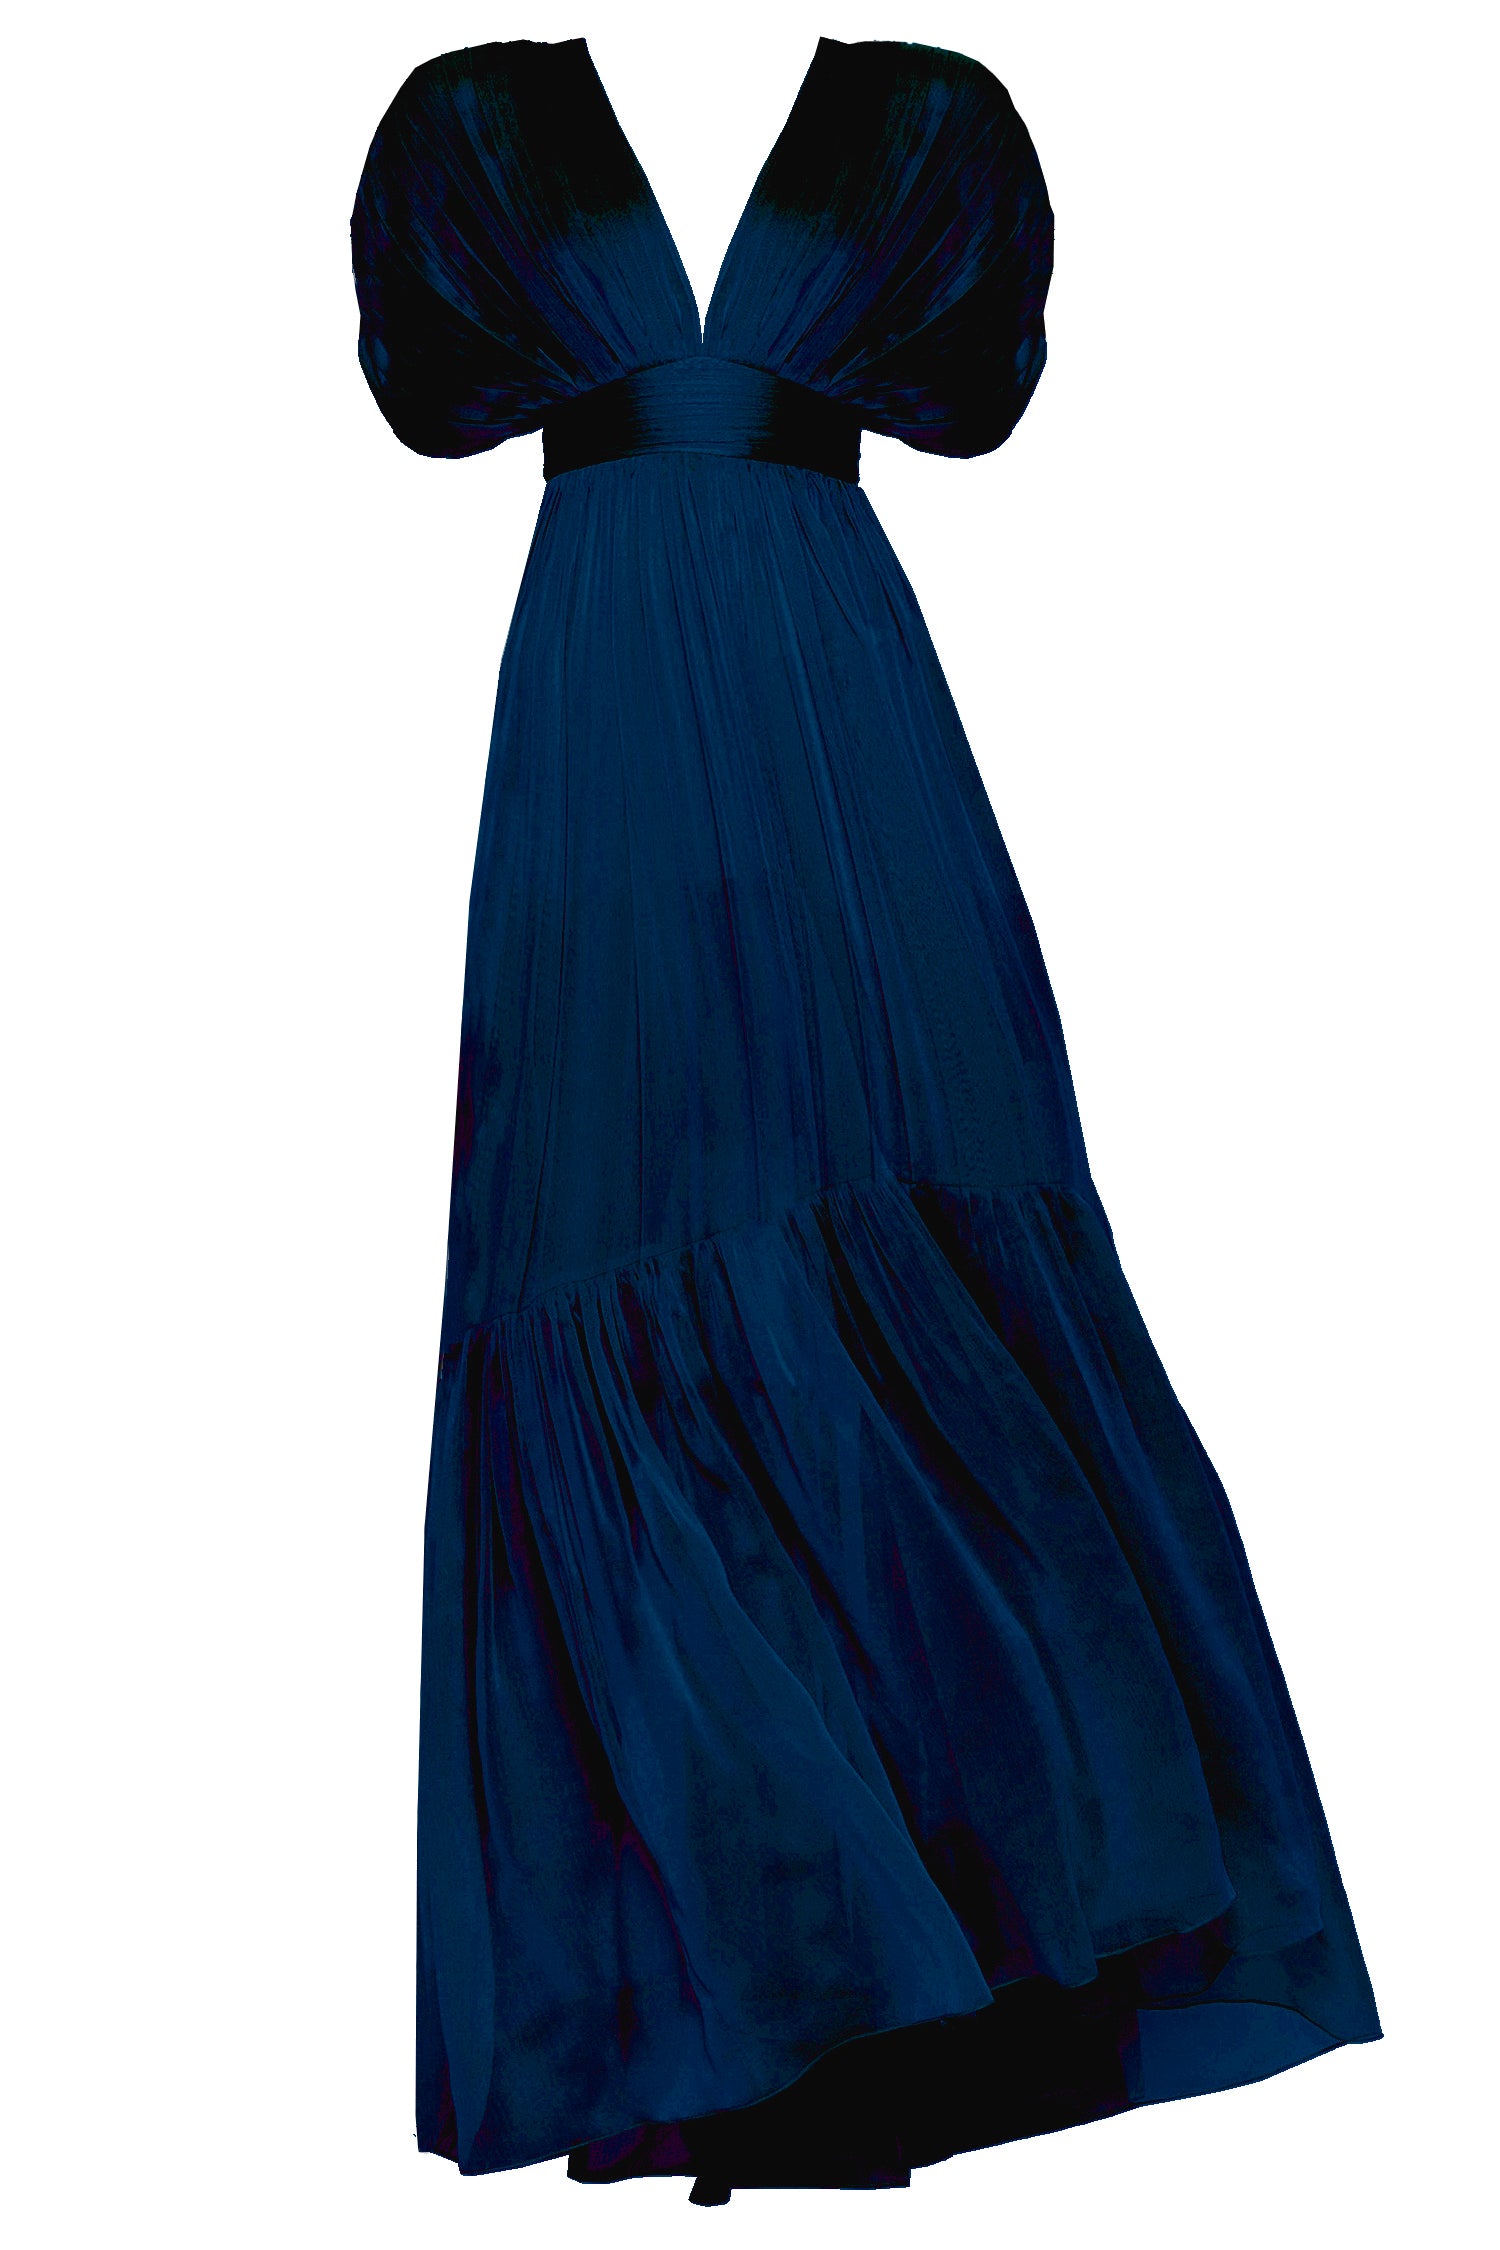 Lerena Chiffon Evening Gown Navy Blue